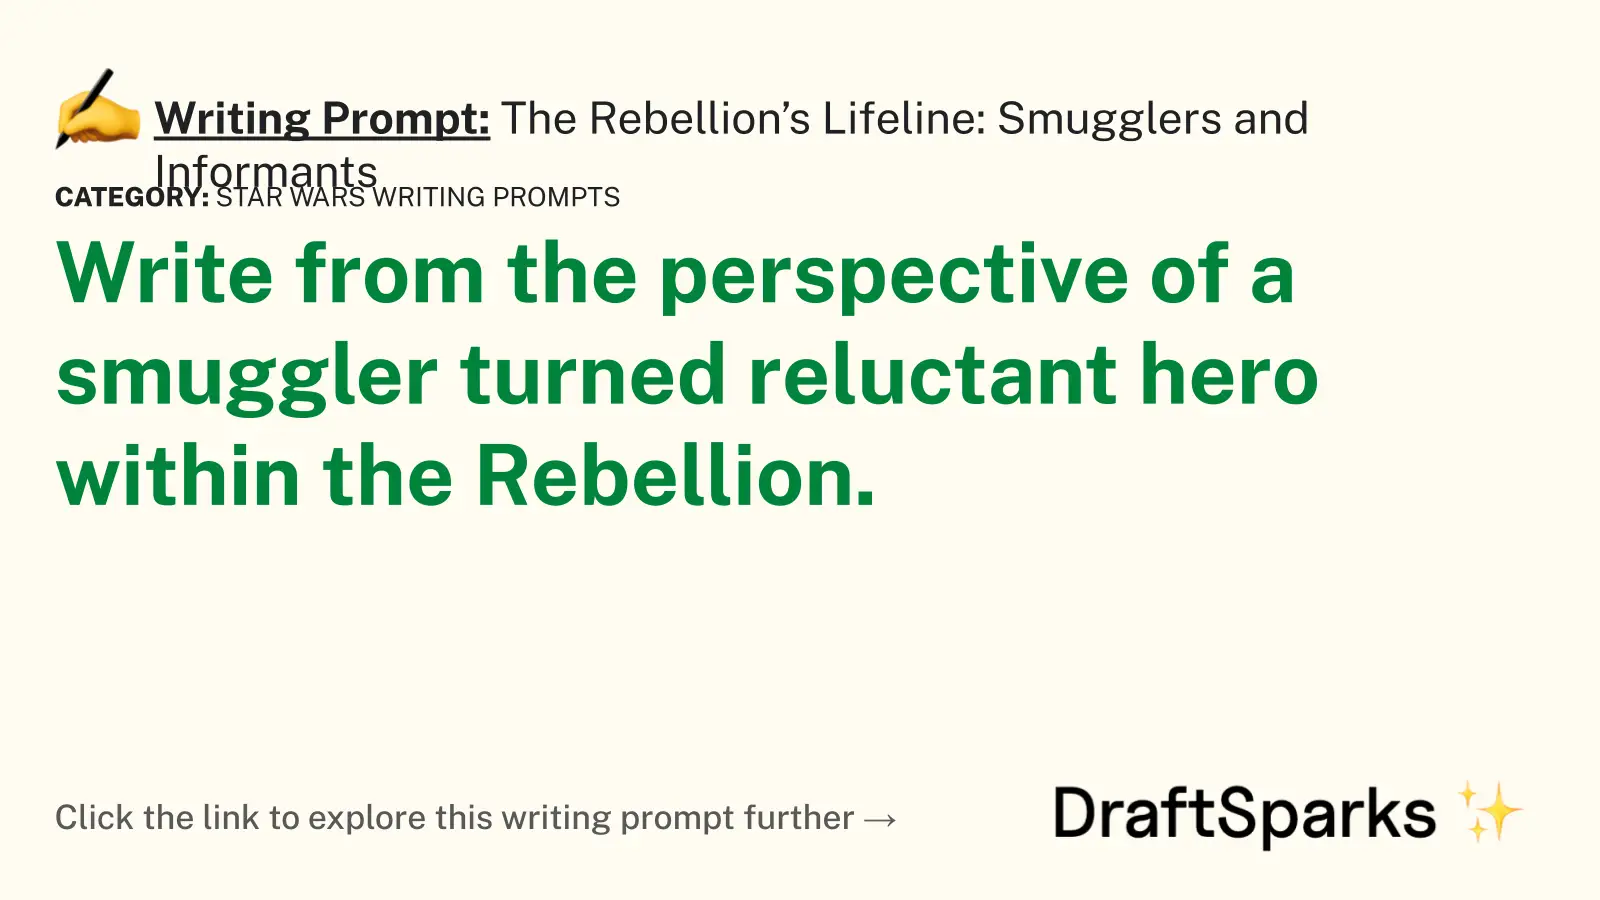 The Rebellion’s Lifeline: Smugglers and Informants